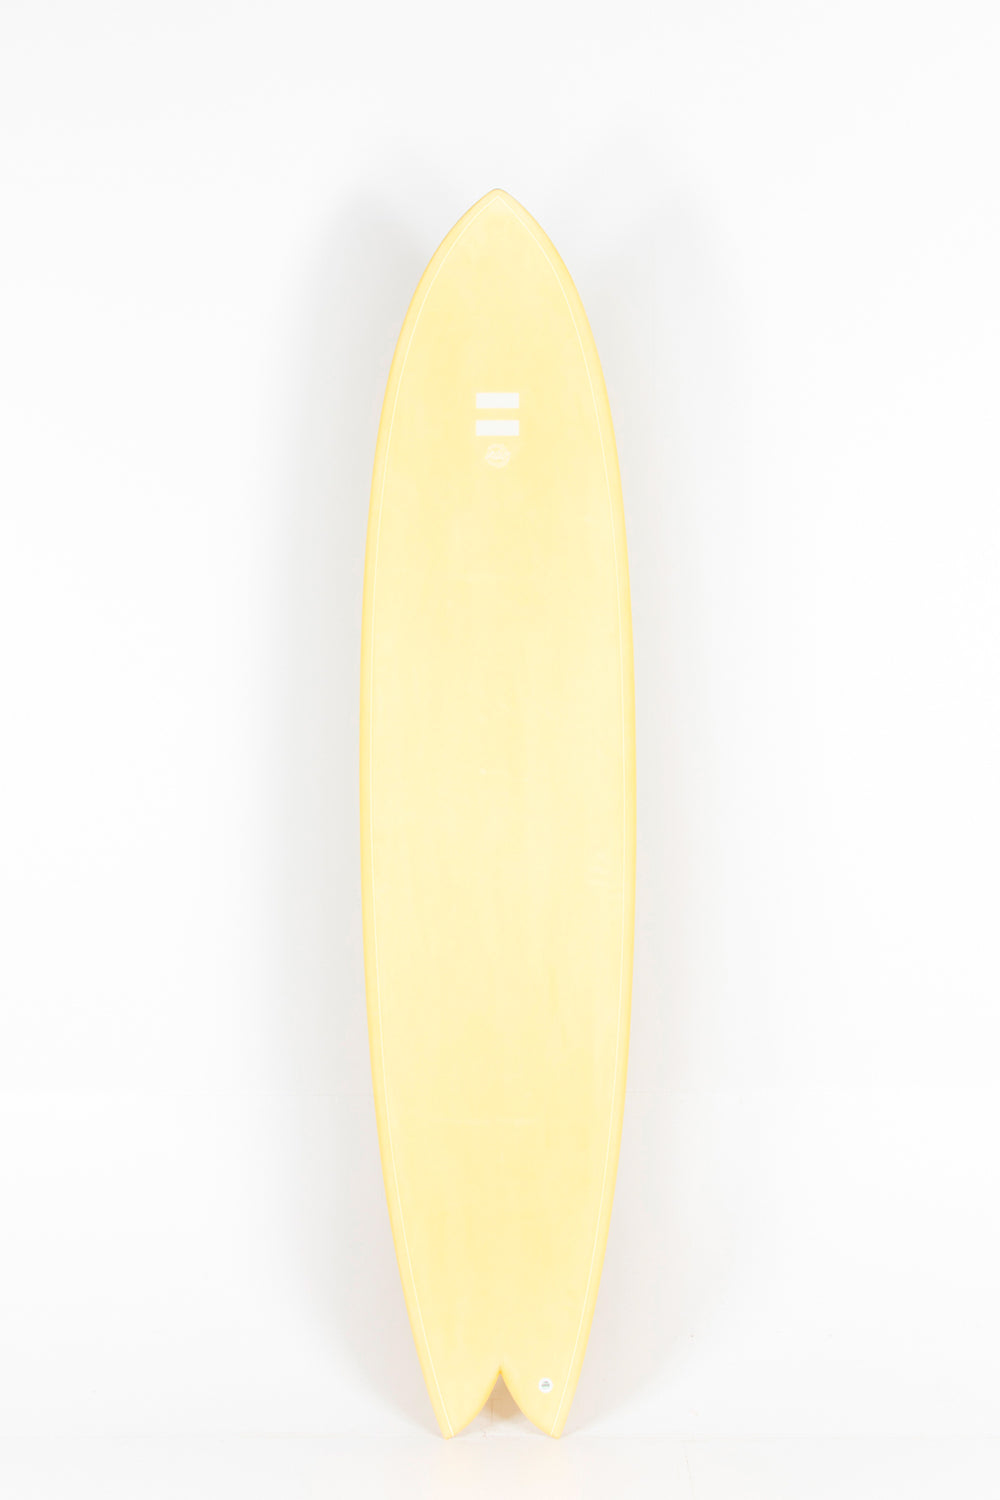 Pukas Surf Shop - Indio Endurance - BIG FISH Sand - 7´2 x 21 1/4 x 2 3/4 - 47L